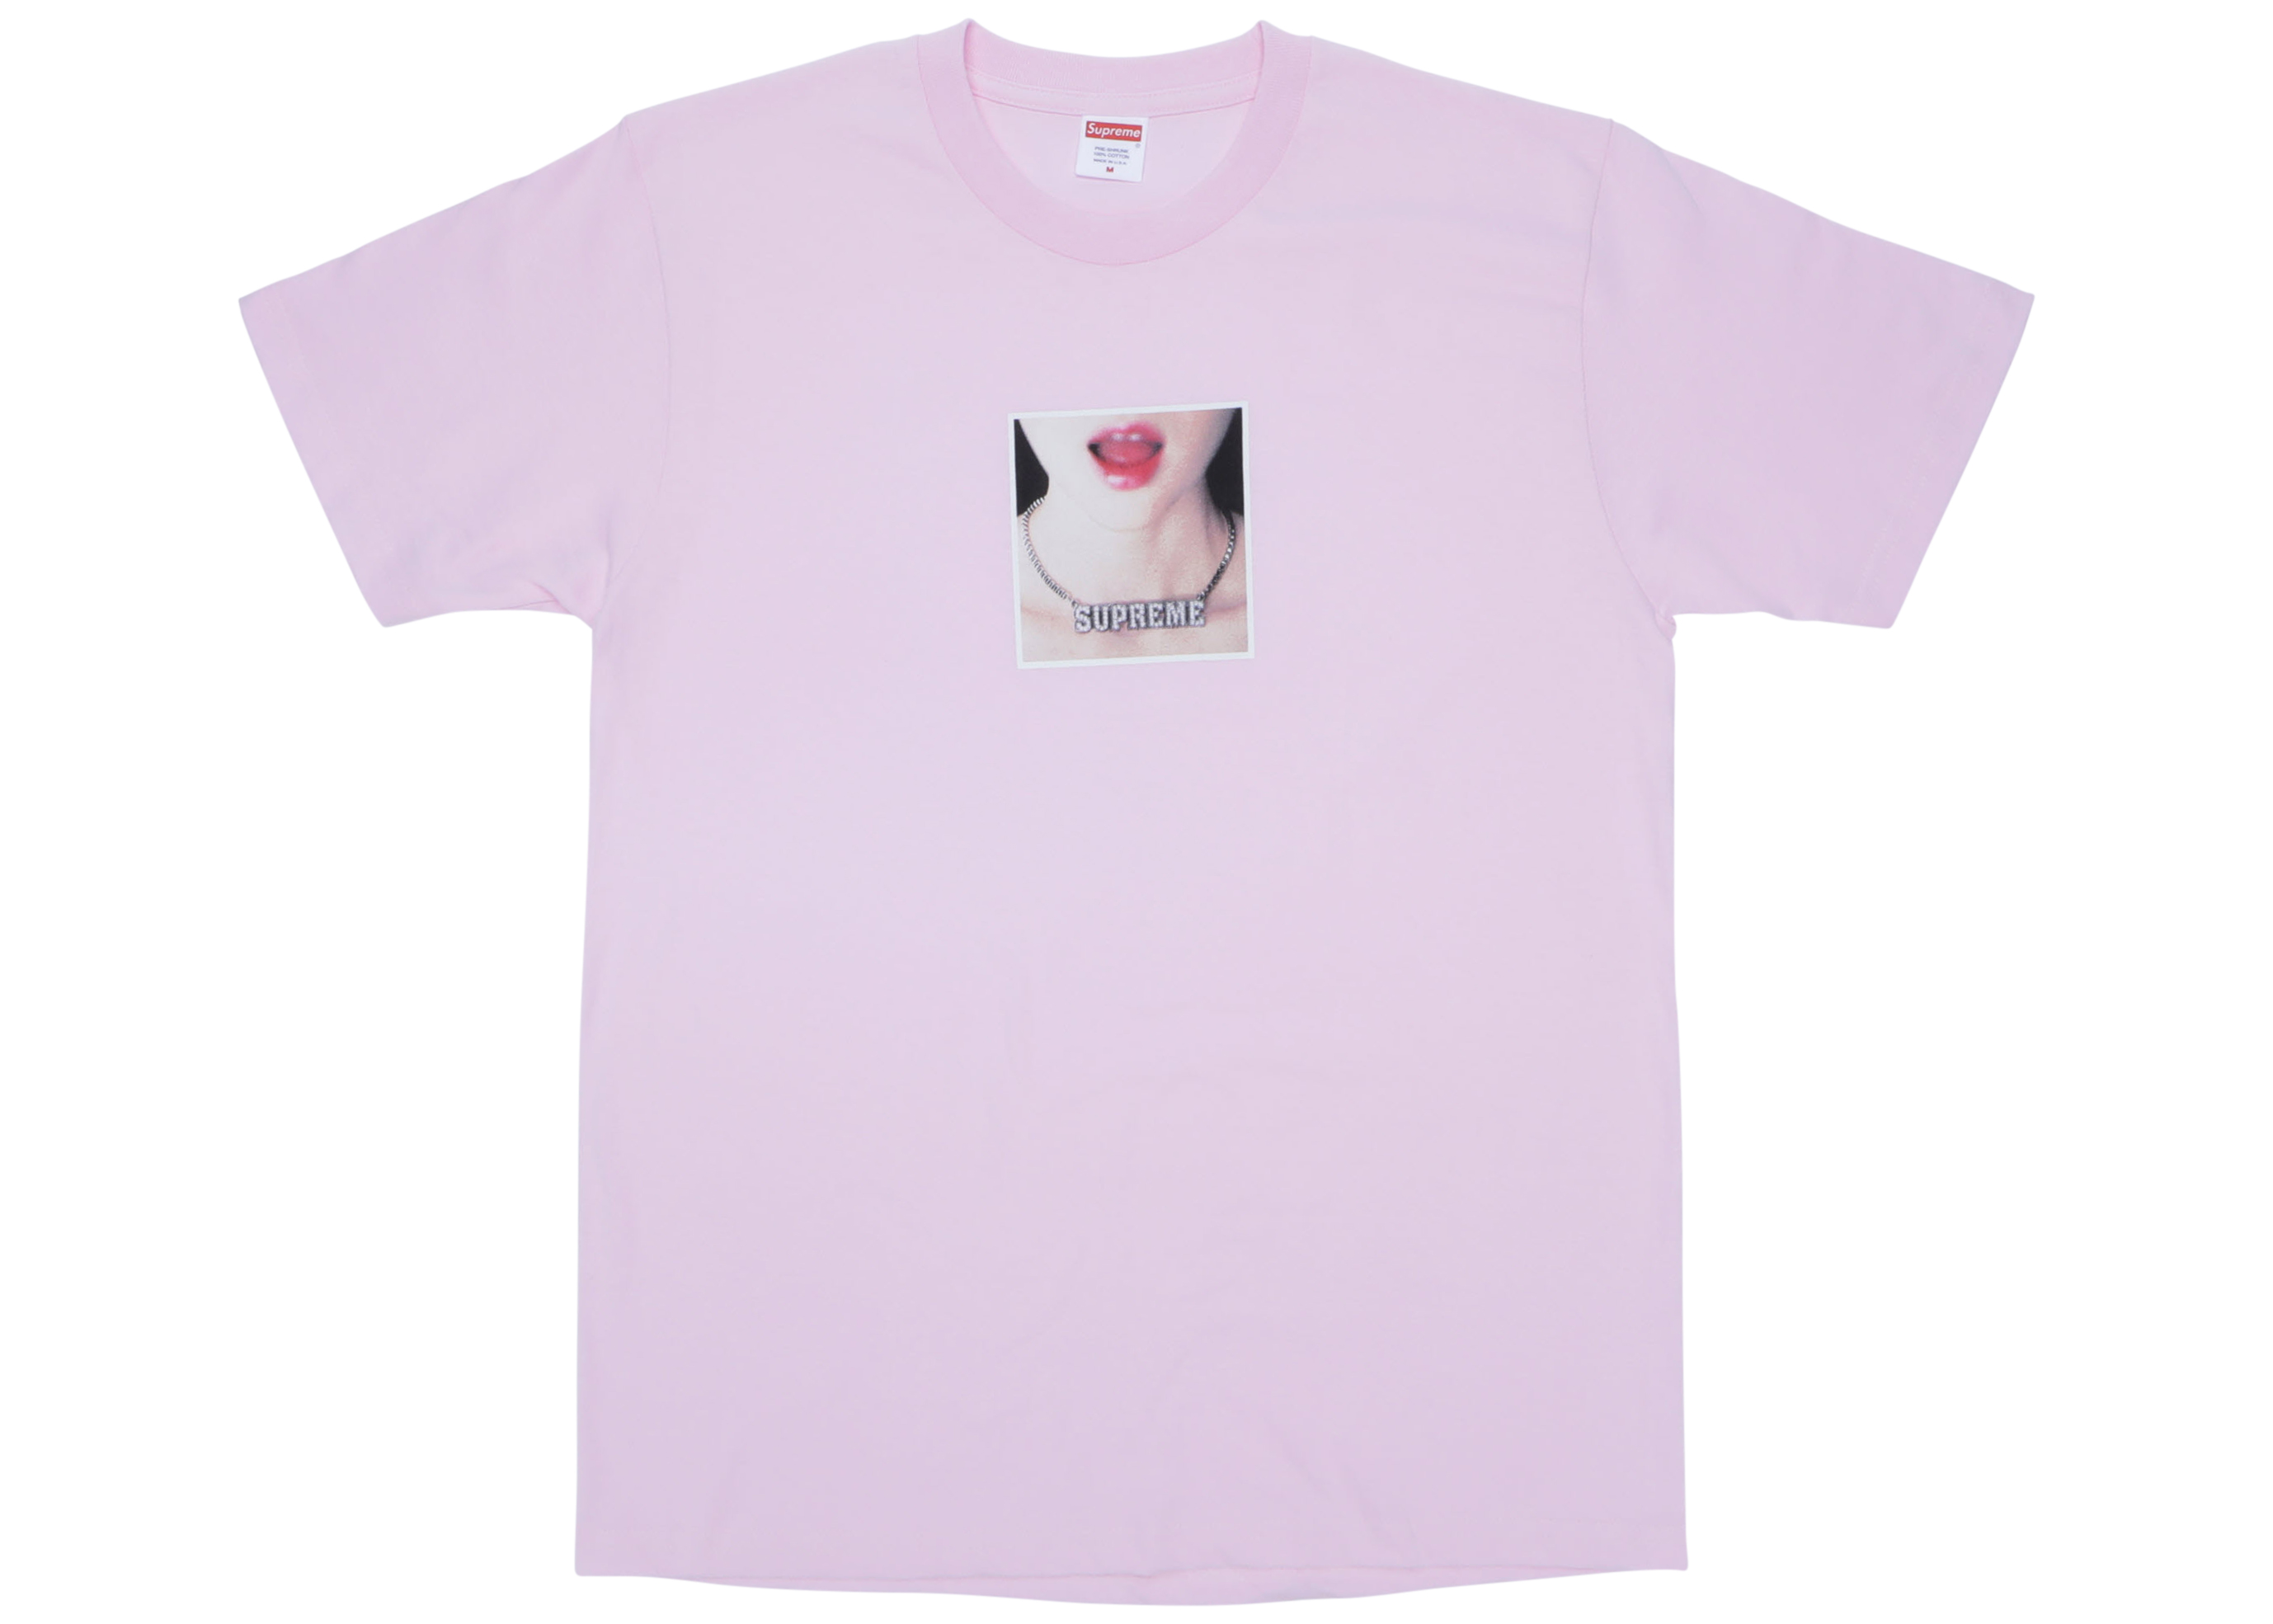 supreme shirt pink